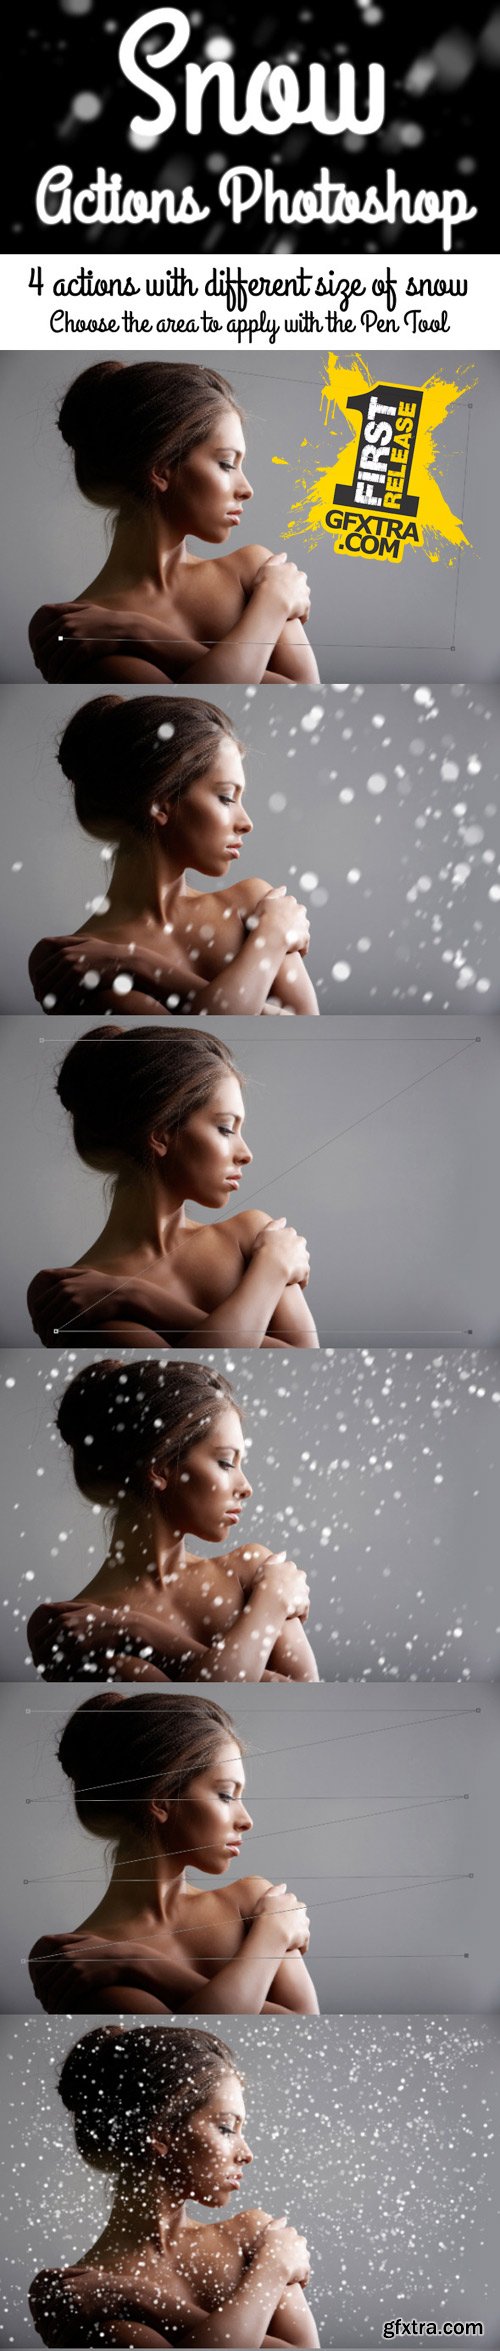 GraphicRiver - Snow Actions Photoshop 9464884